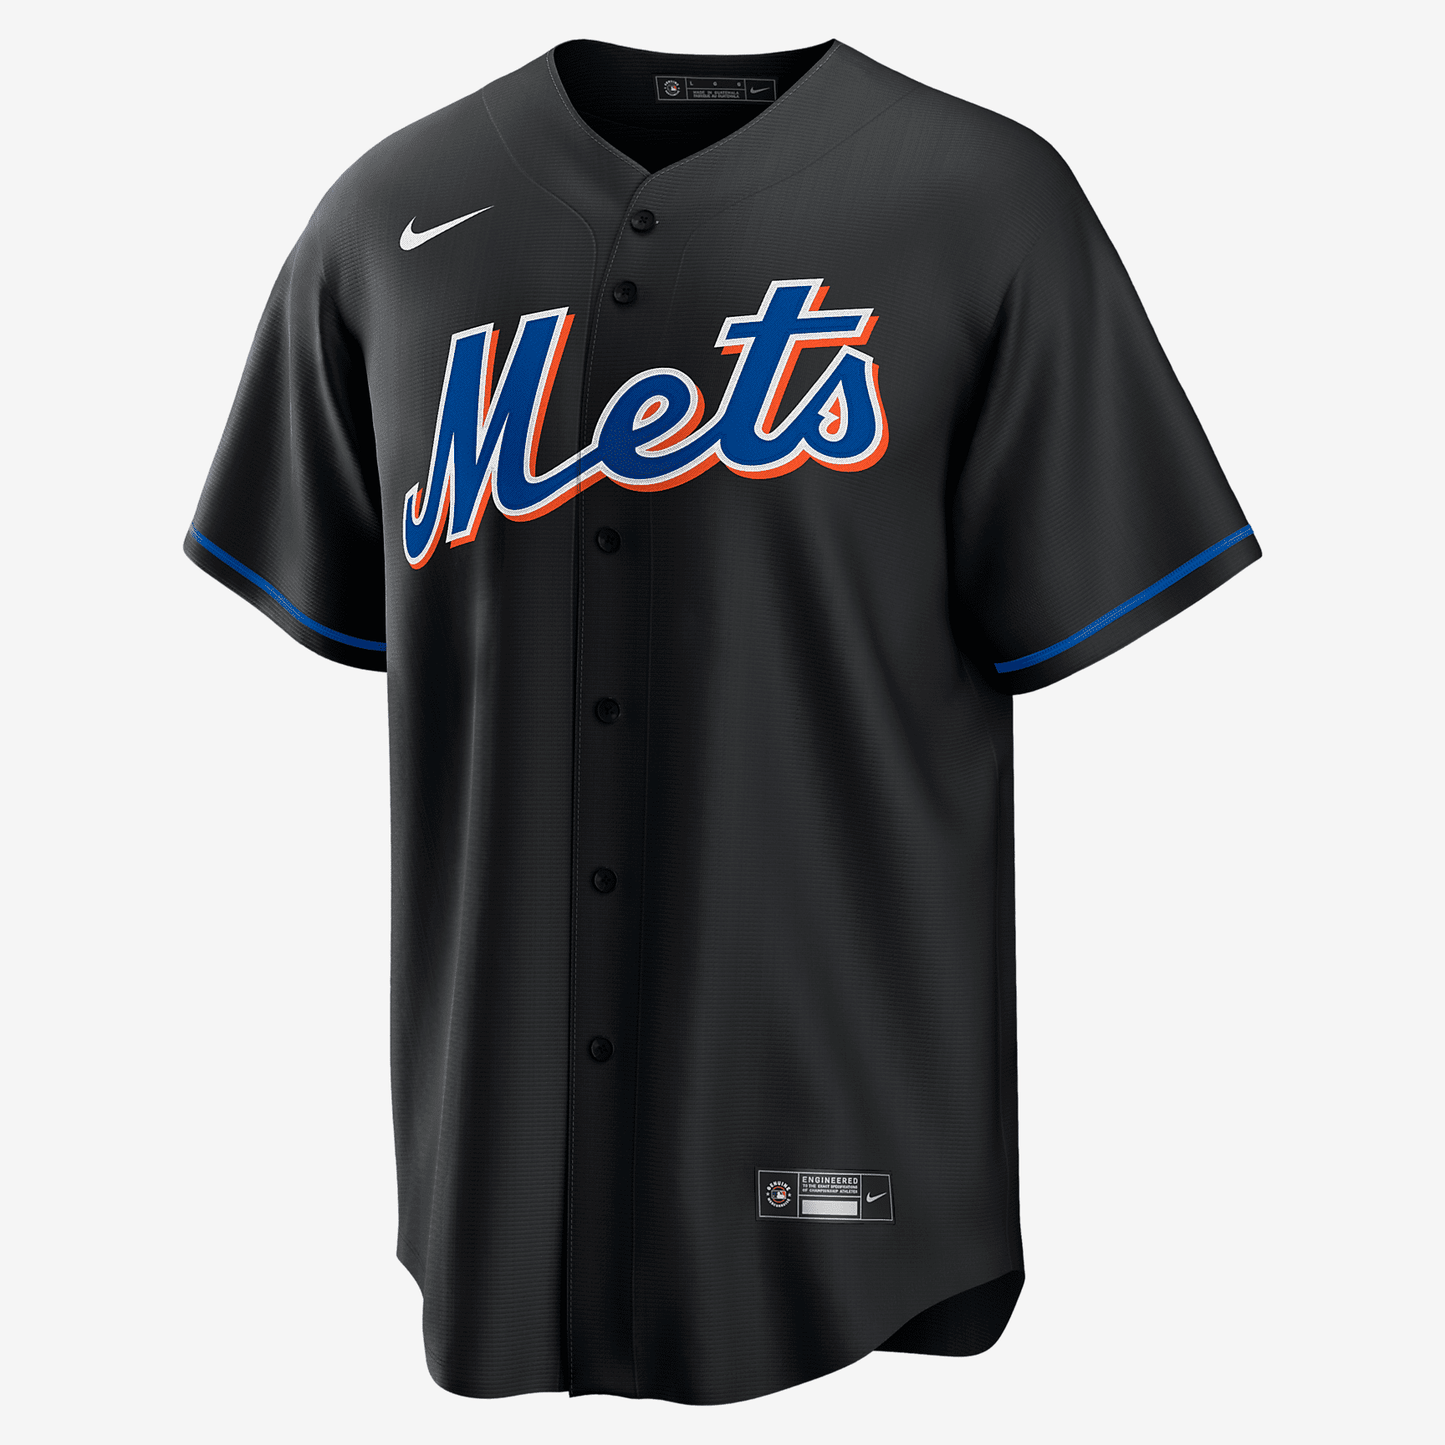 MLB New York Mets (Mike Piazza) Men's Replica Baseball Jersey - Black